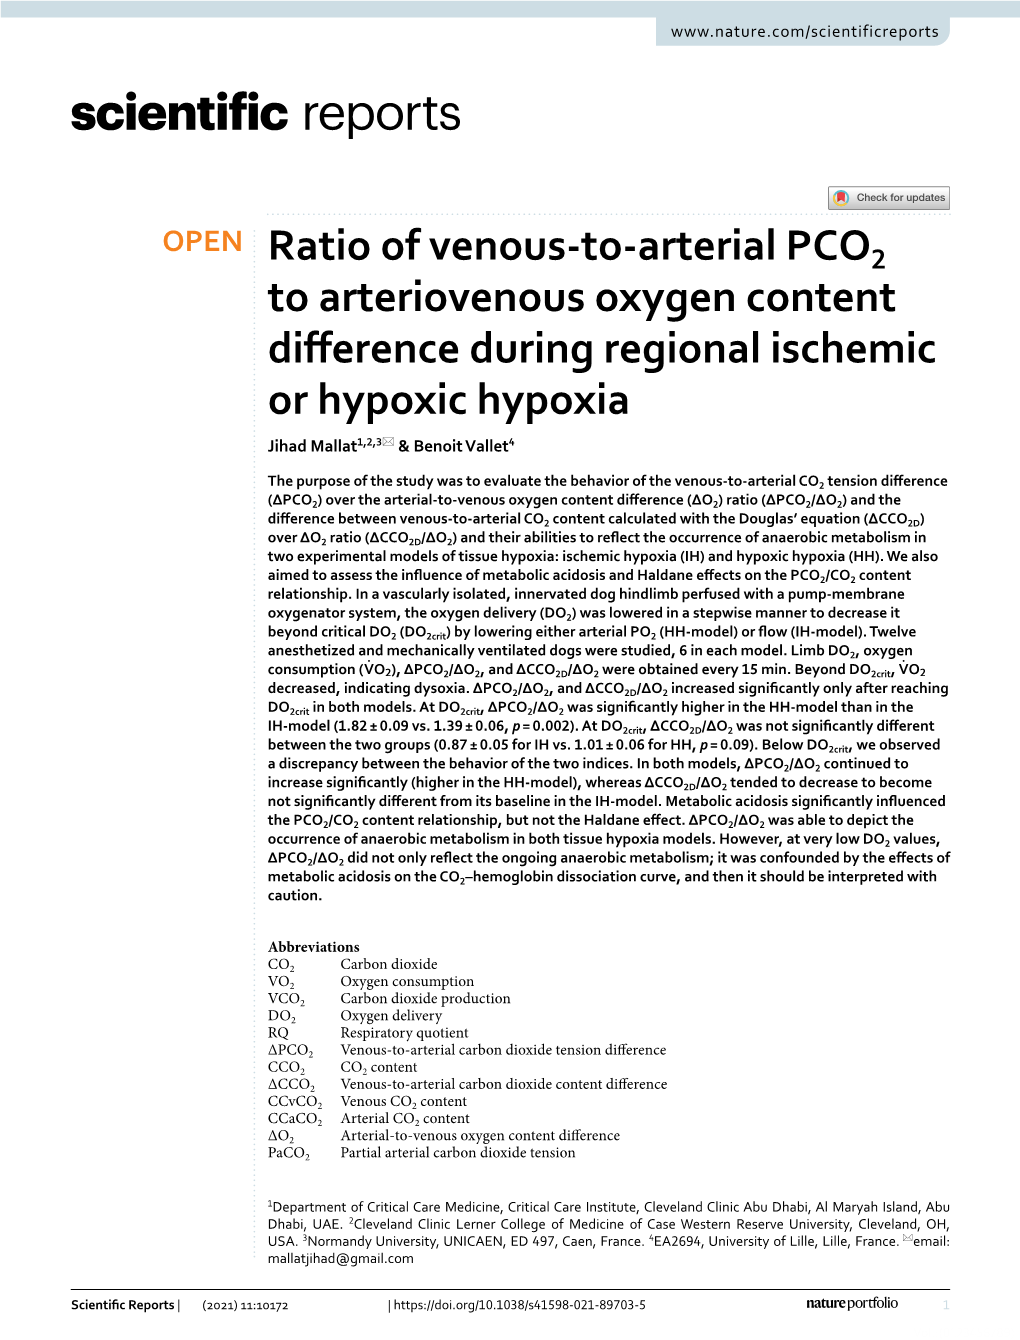 Ratio of Venous-To-Arterial PCO2 to Arteriovenous Oxygen Content